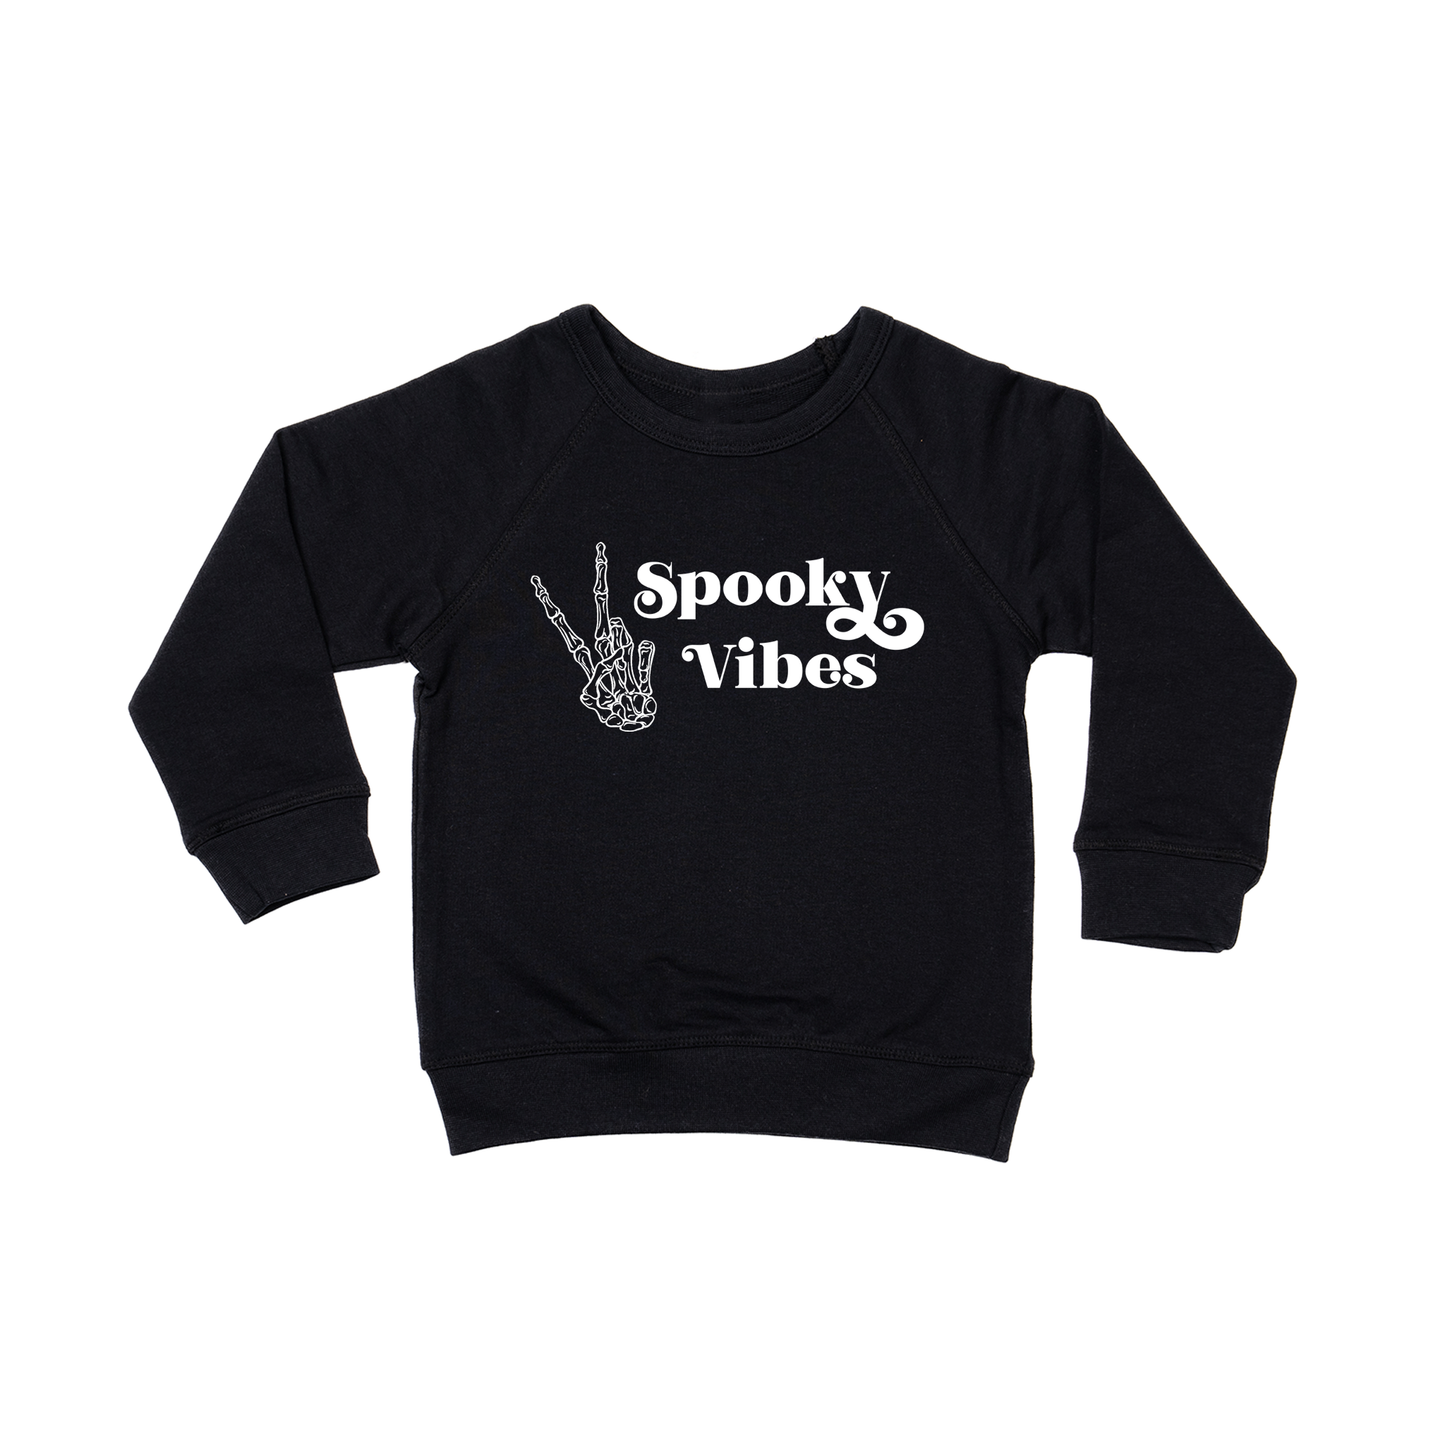 Spooky Vibes (White) - Kids Sweatshirt (Black)